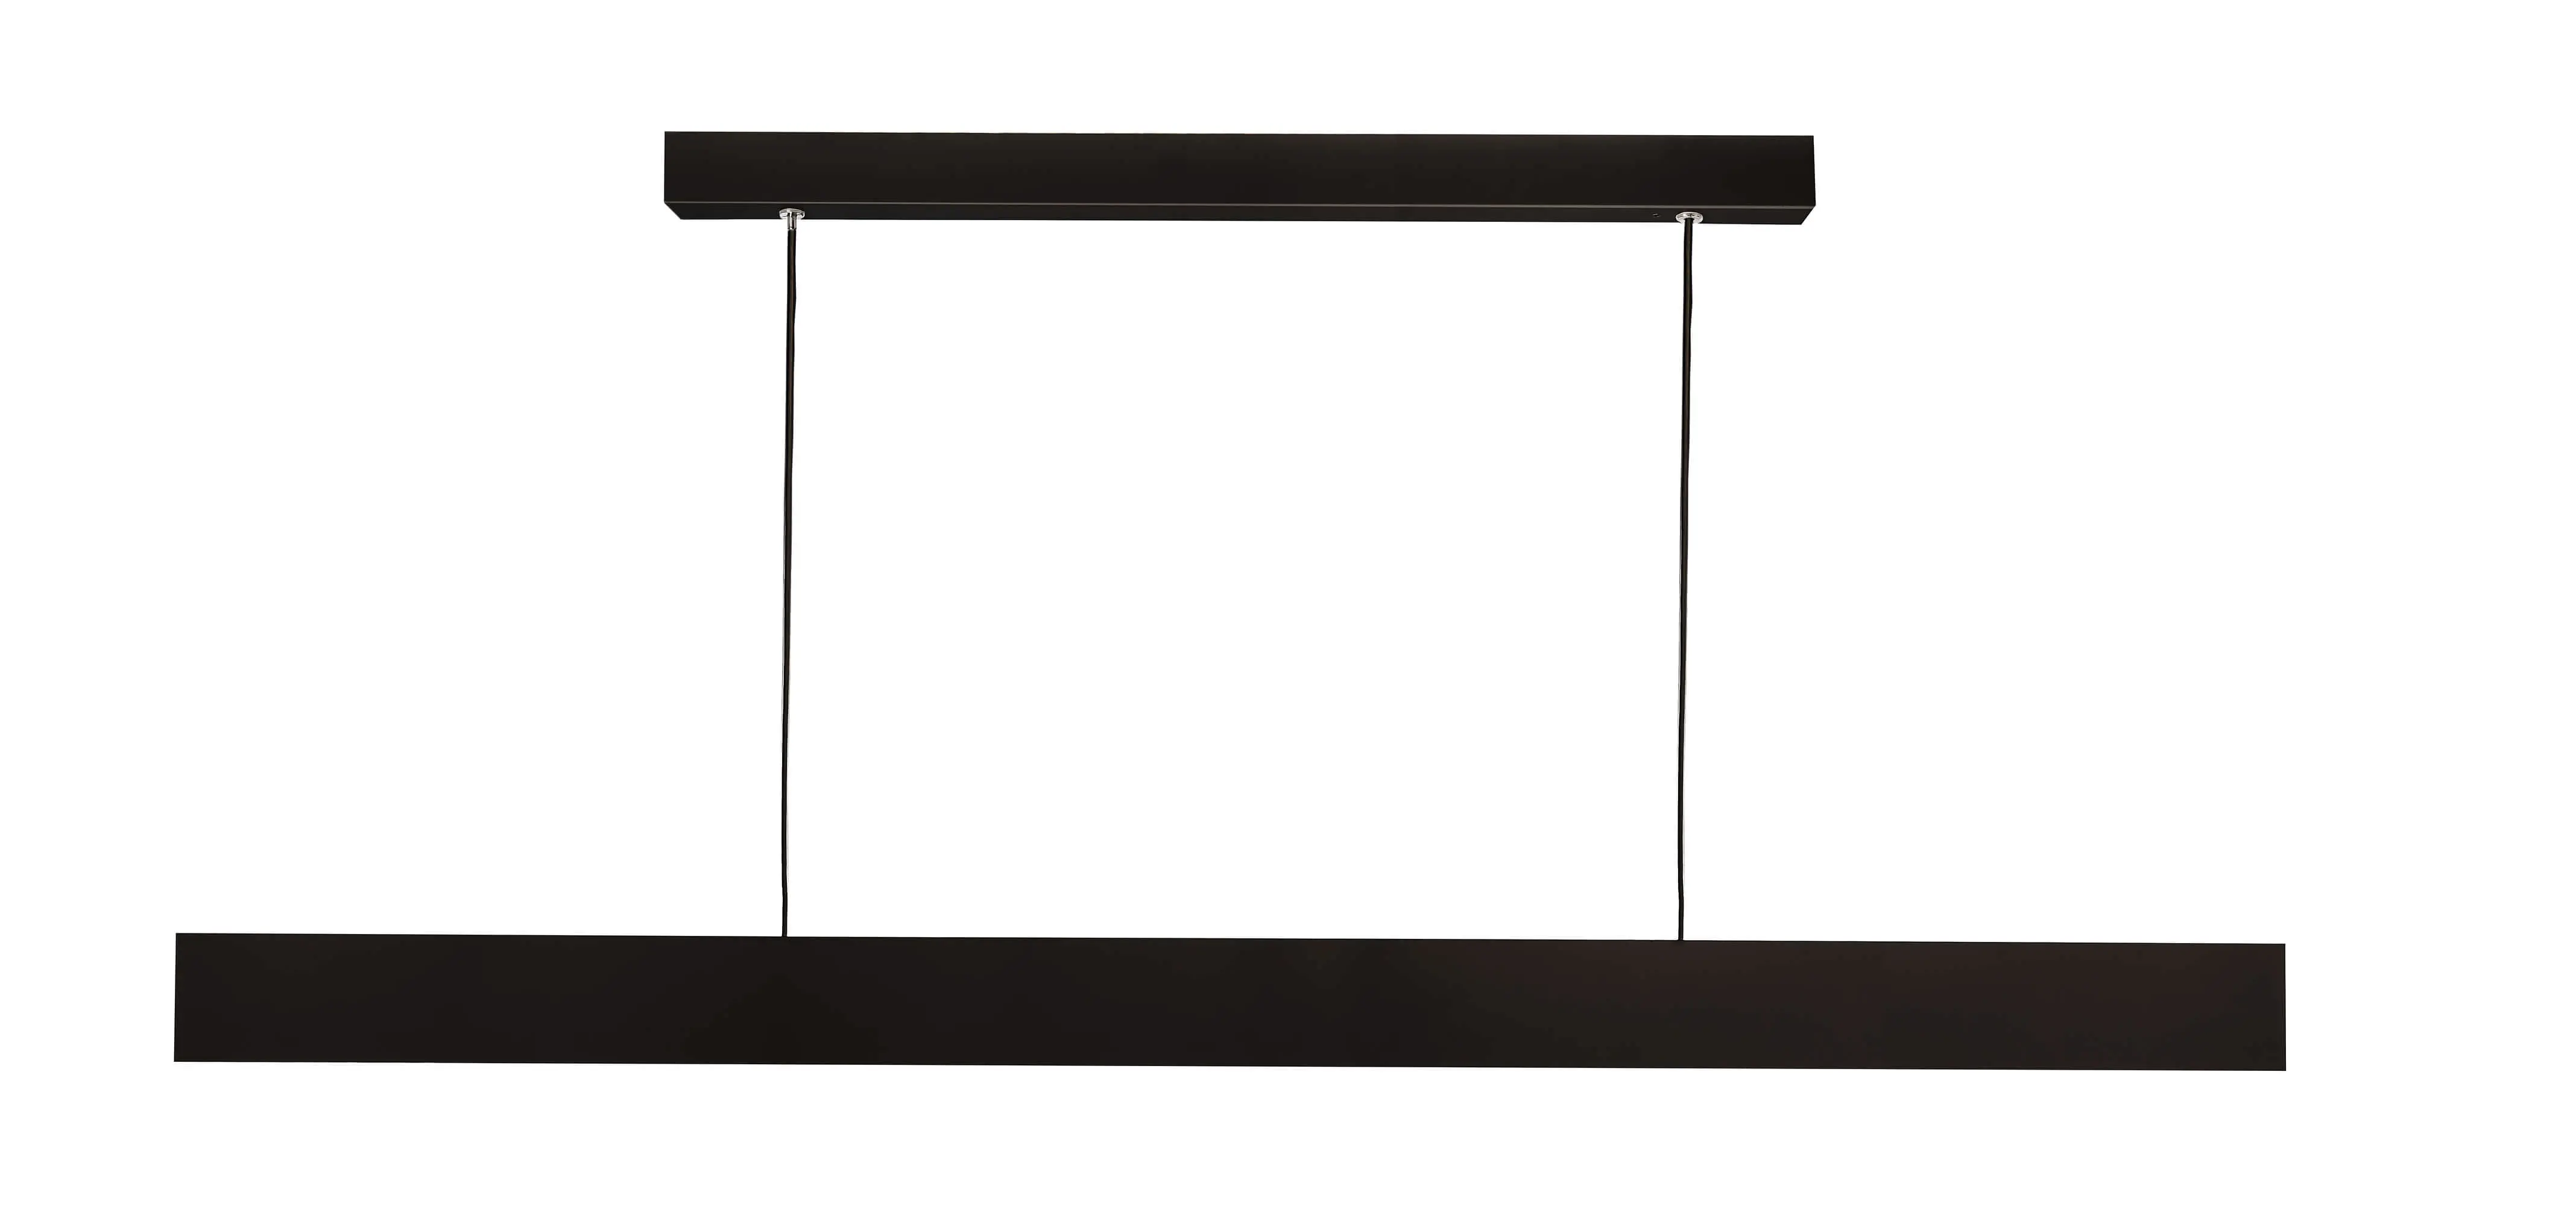 LED-Hängelampe Apollon in schlankem Design schwarz 146.4cm